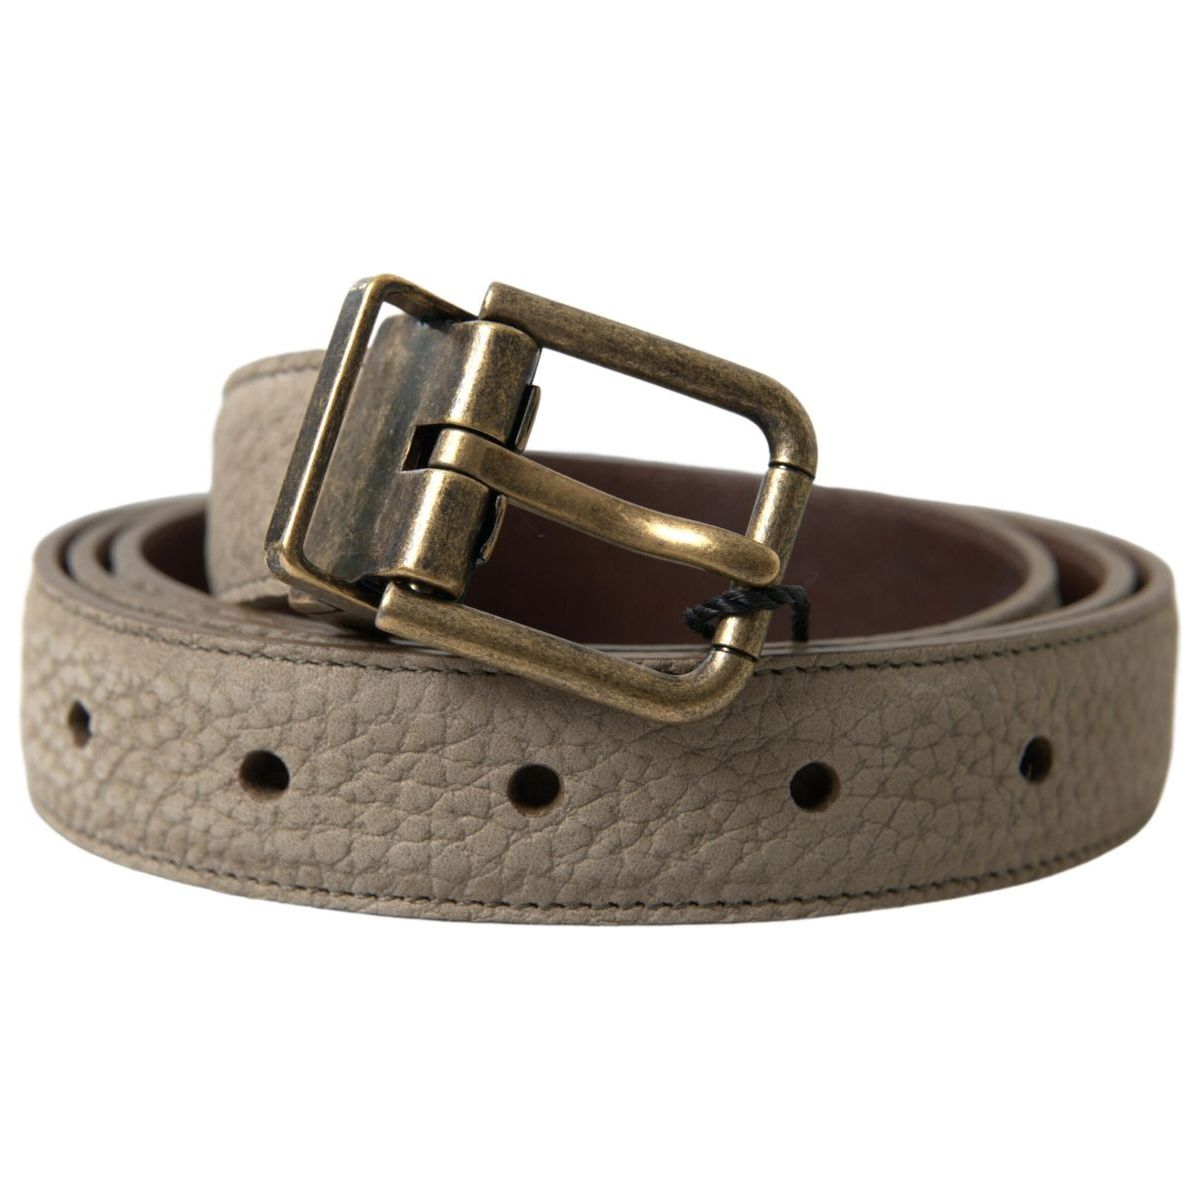 Dolce & Gabbana Elegant Beige Leather Belt with Metal Buckle beige-leather-gold-metal-buckle-men-belt 465A5280-scaled-85d6ea1a-699.jpg